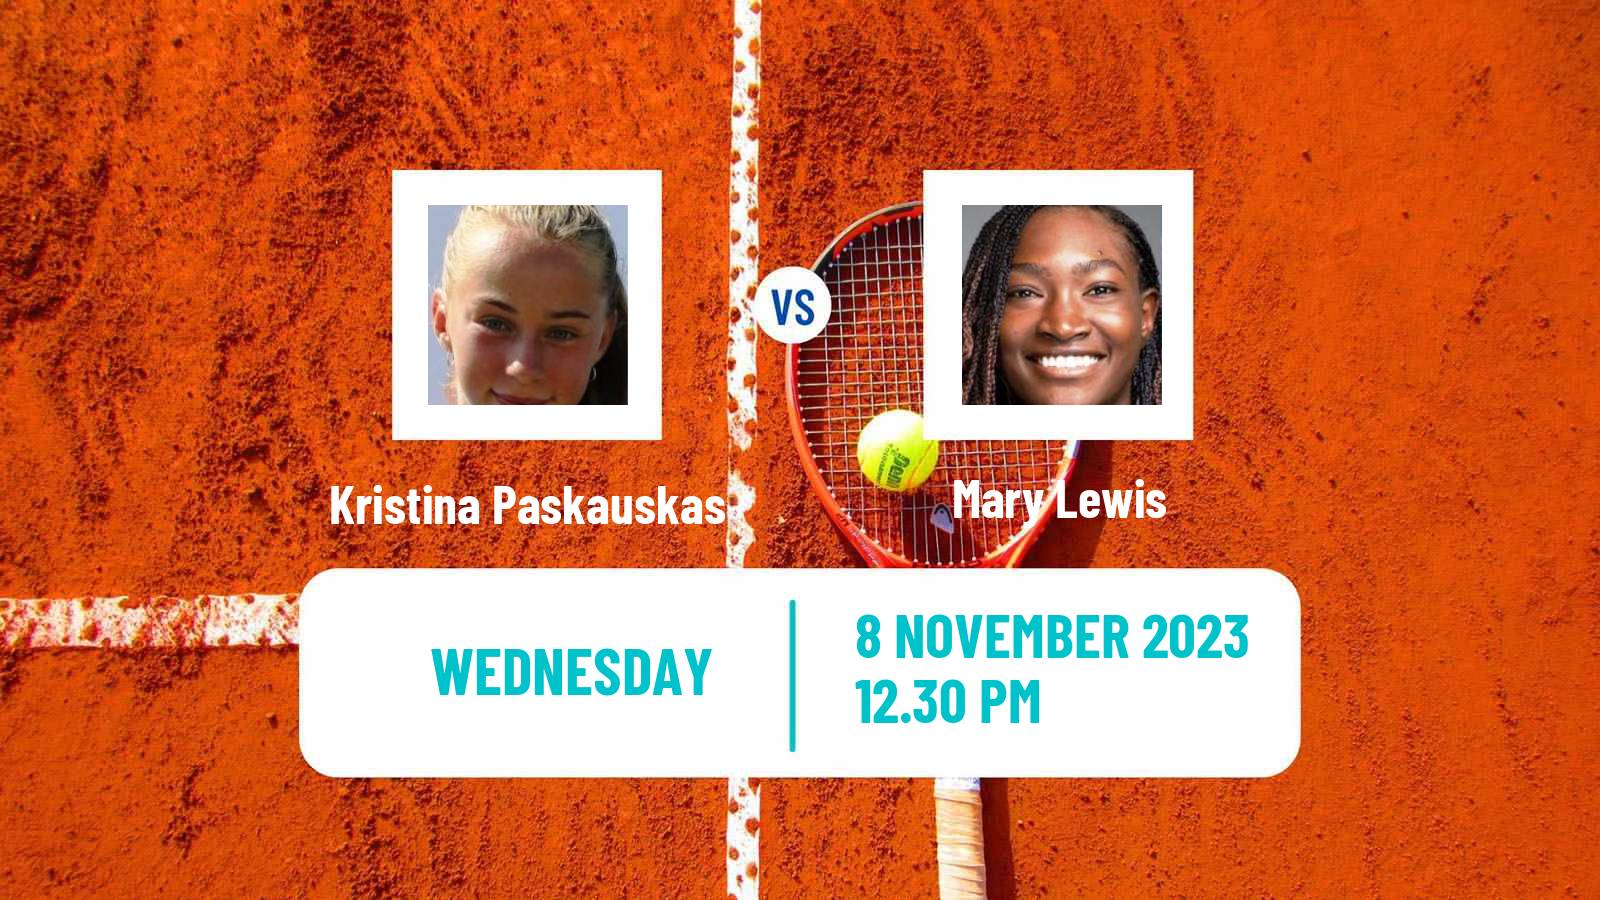 Tennis ITF W15 Champaign Il Women Kristina Paskauskas - Mary Lewis